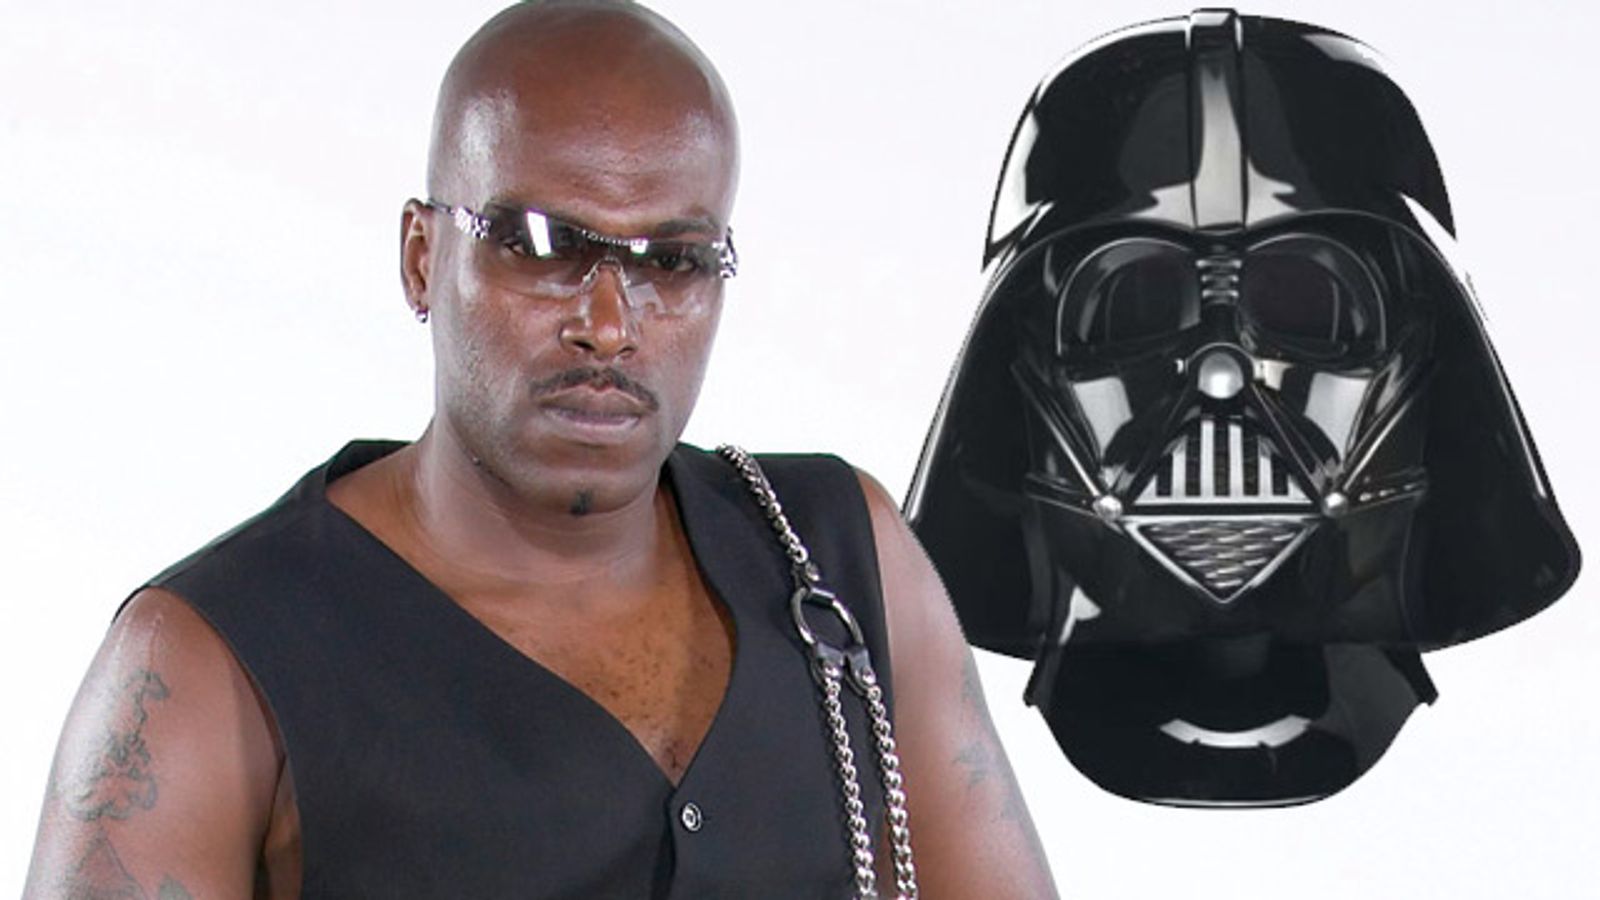 Lexington Steele Set to Play Darth Vader in ‘Star Wars XXX’ Parody